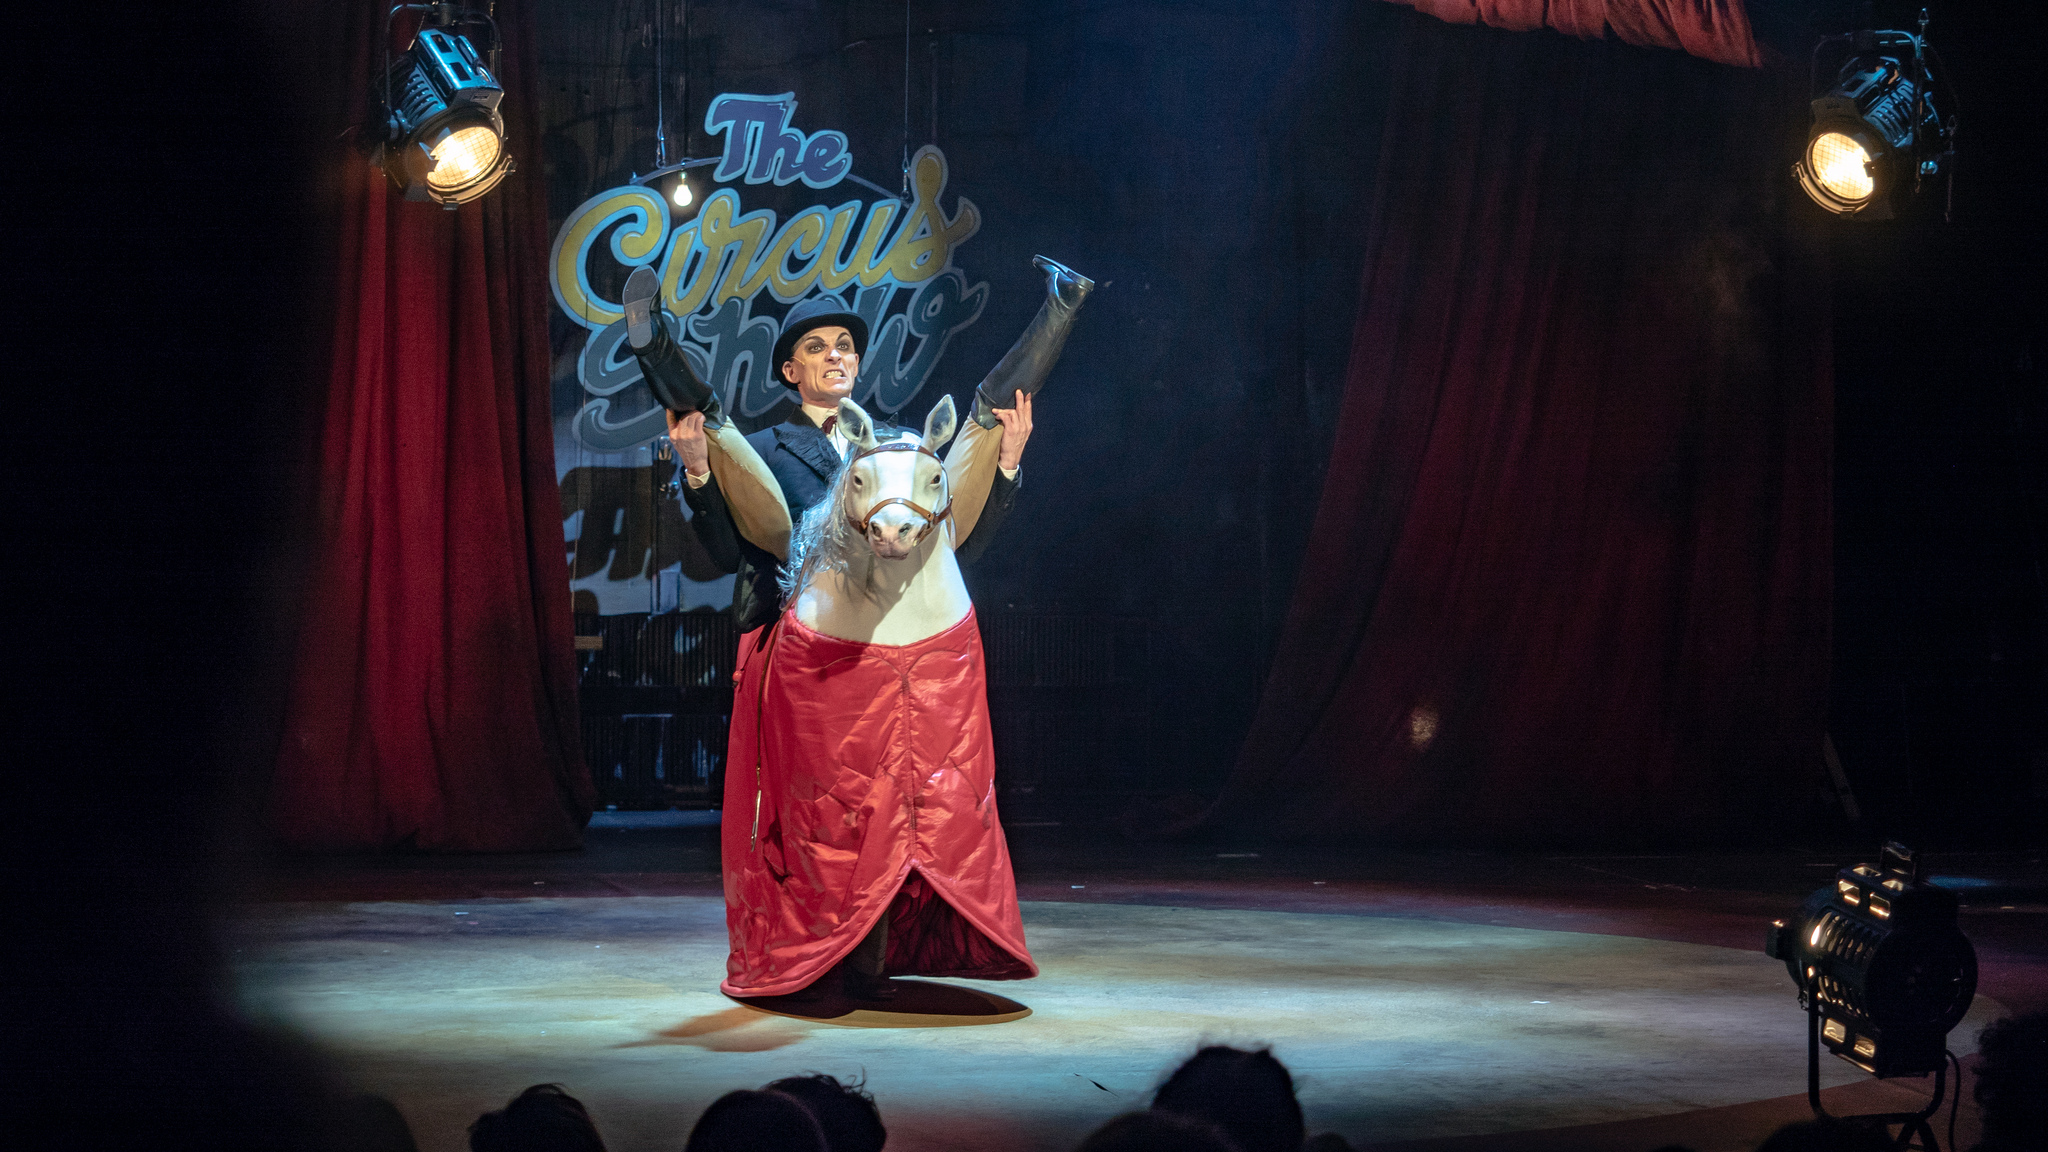 Lion - The weird and magical Abracadabra Circus Show Turun Kaupunginteatterissa